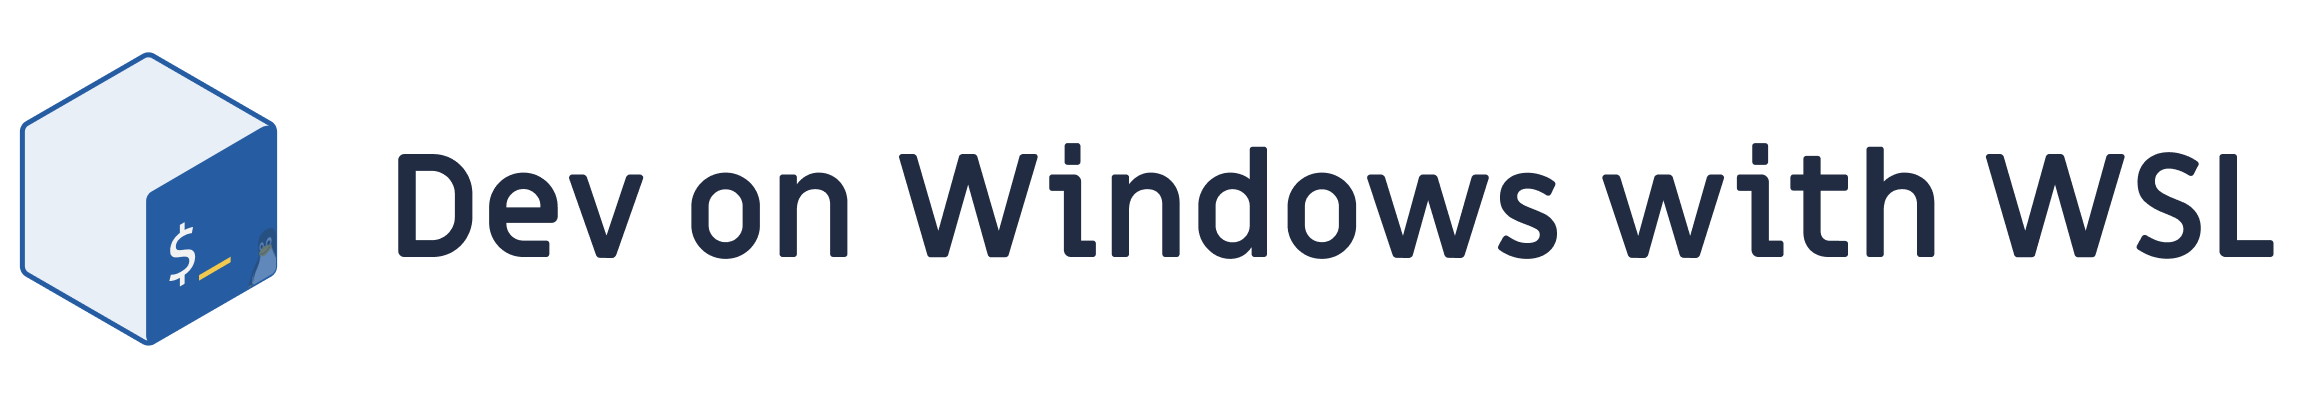 Dev on Windows with WSL